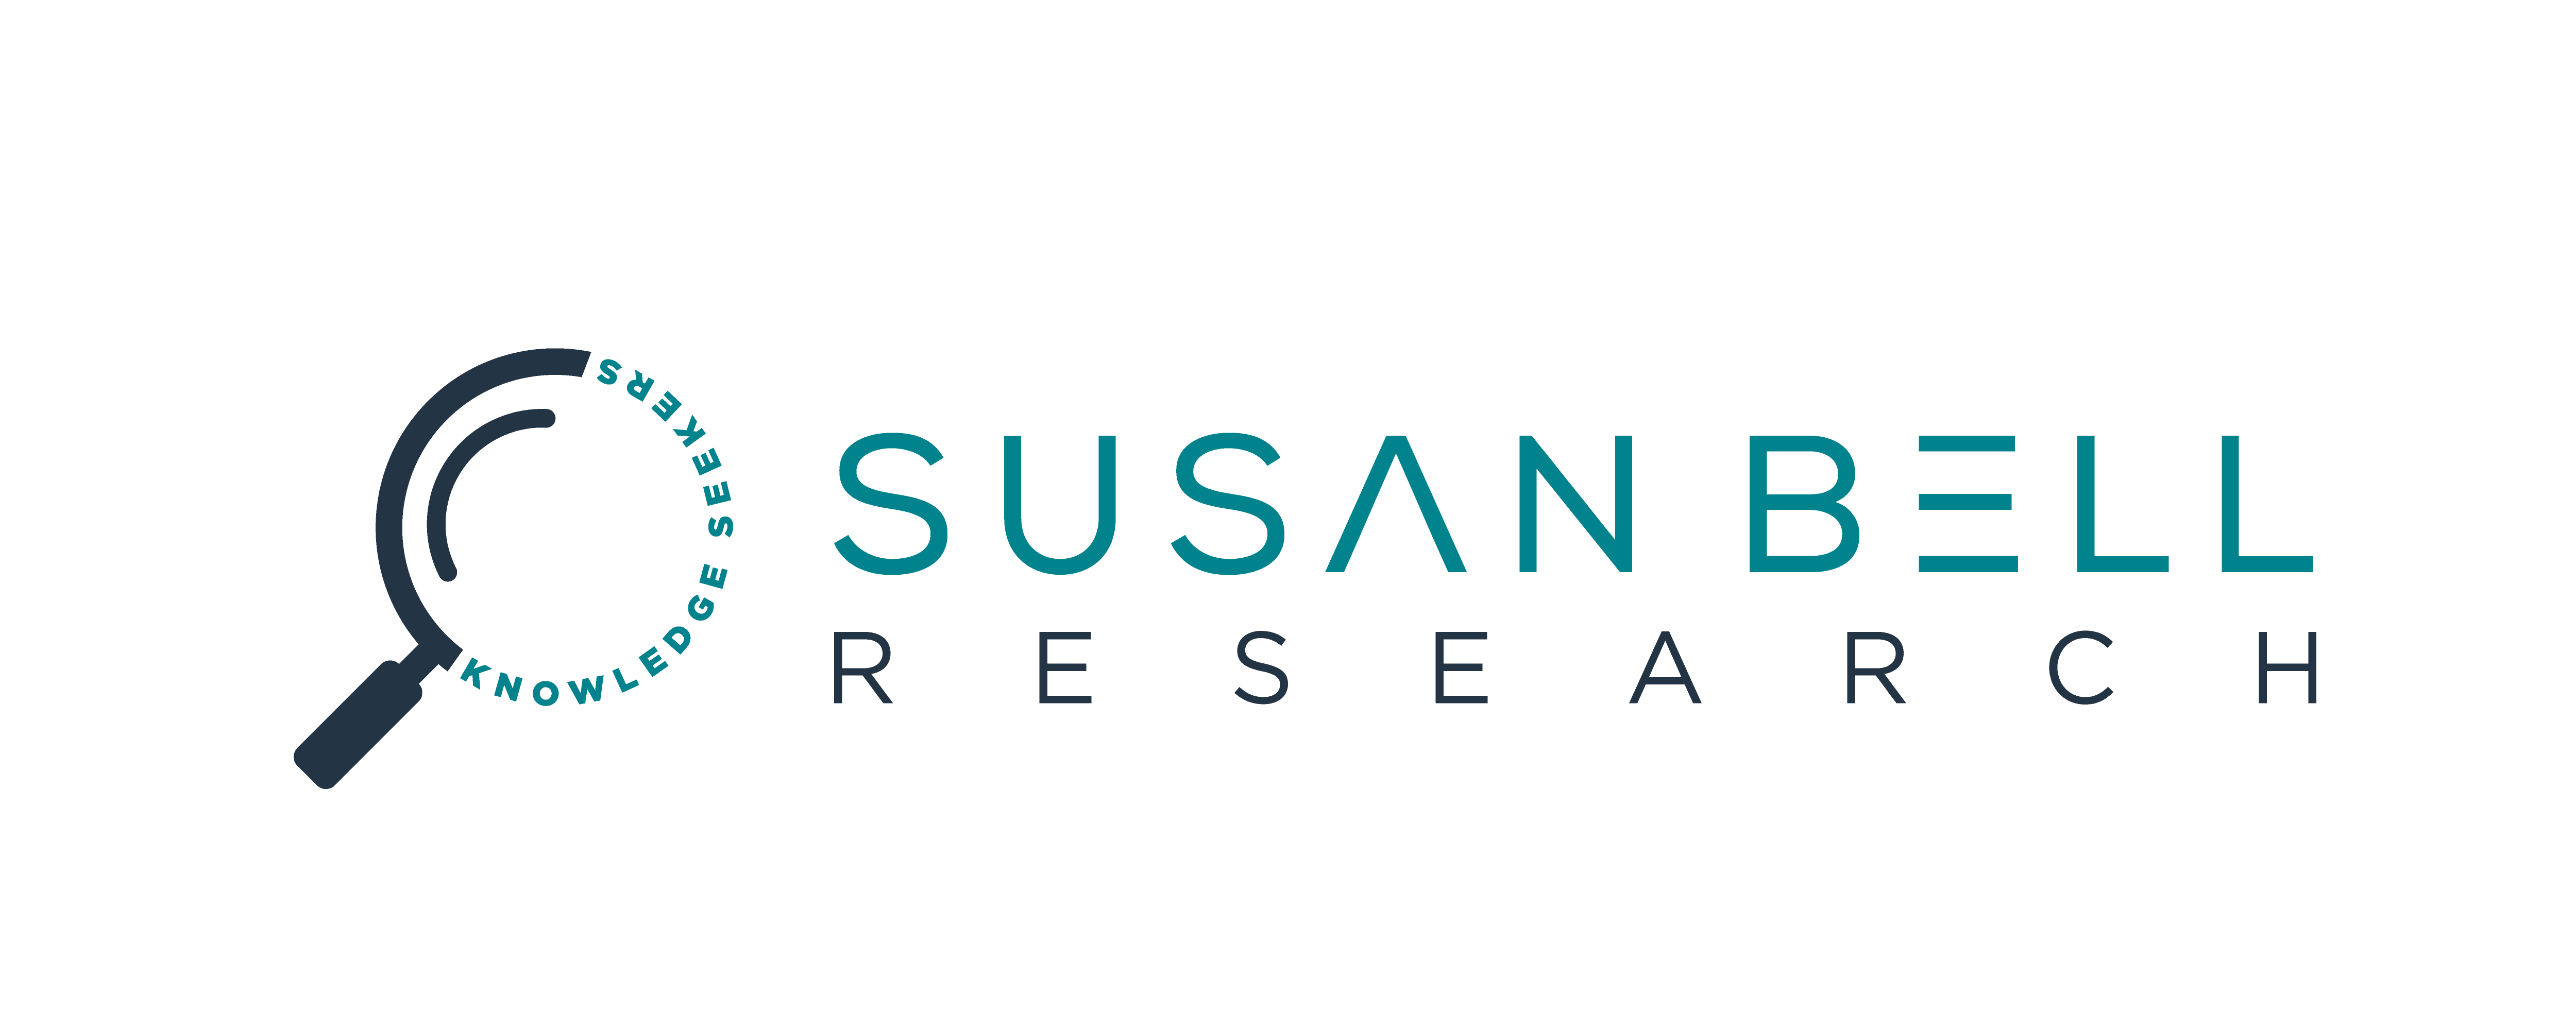 Susan Bell Research Logo